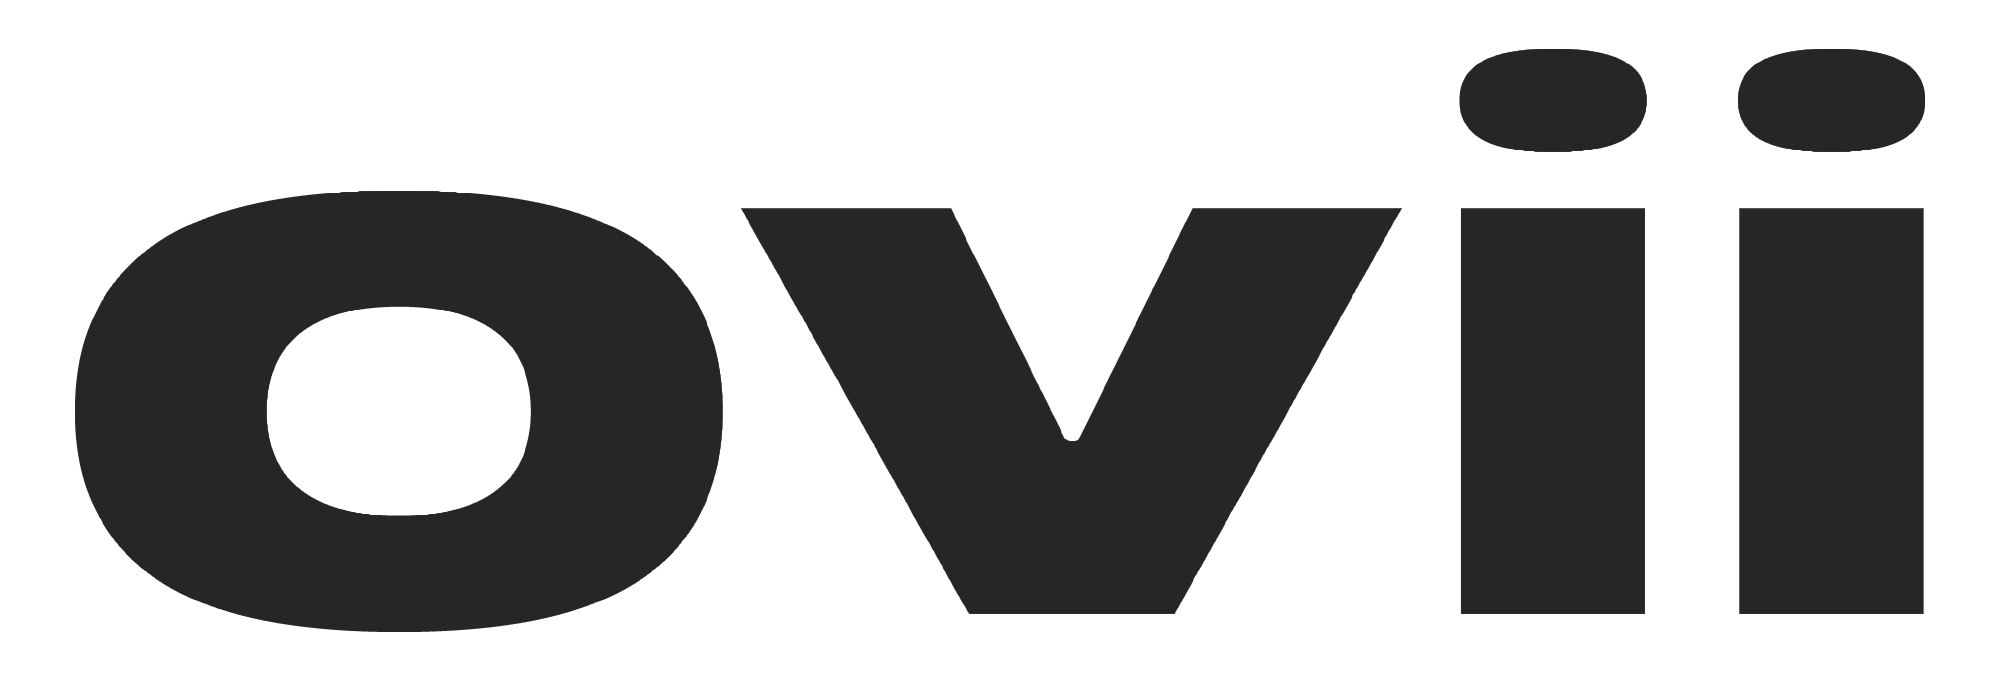 Ovii_Logo whte border copy